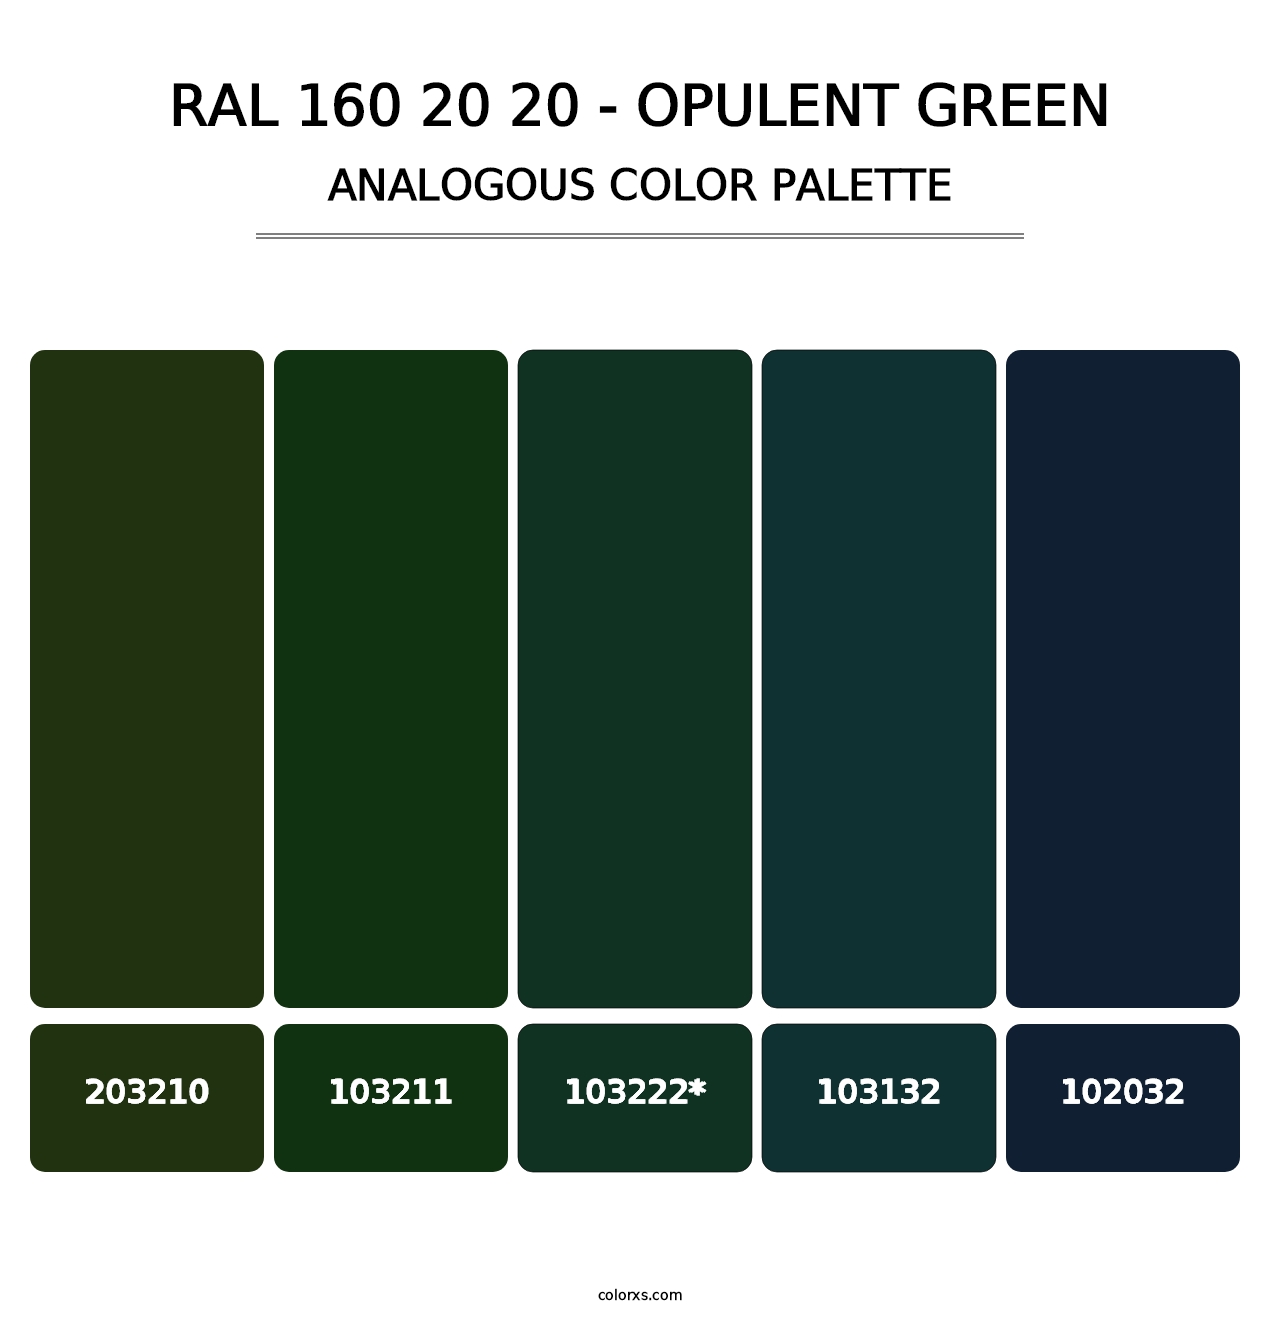 RAL 160 20 20 - Opulent Green - Analogous Color Palette